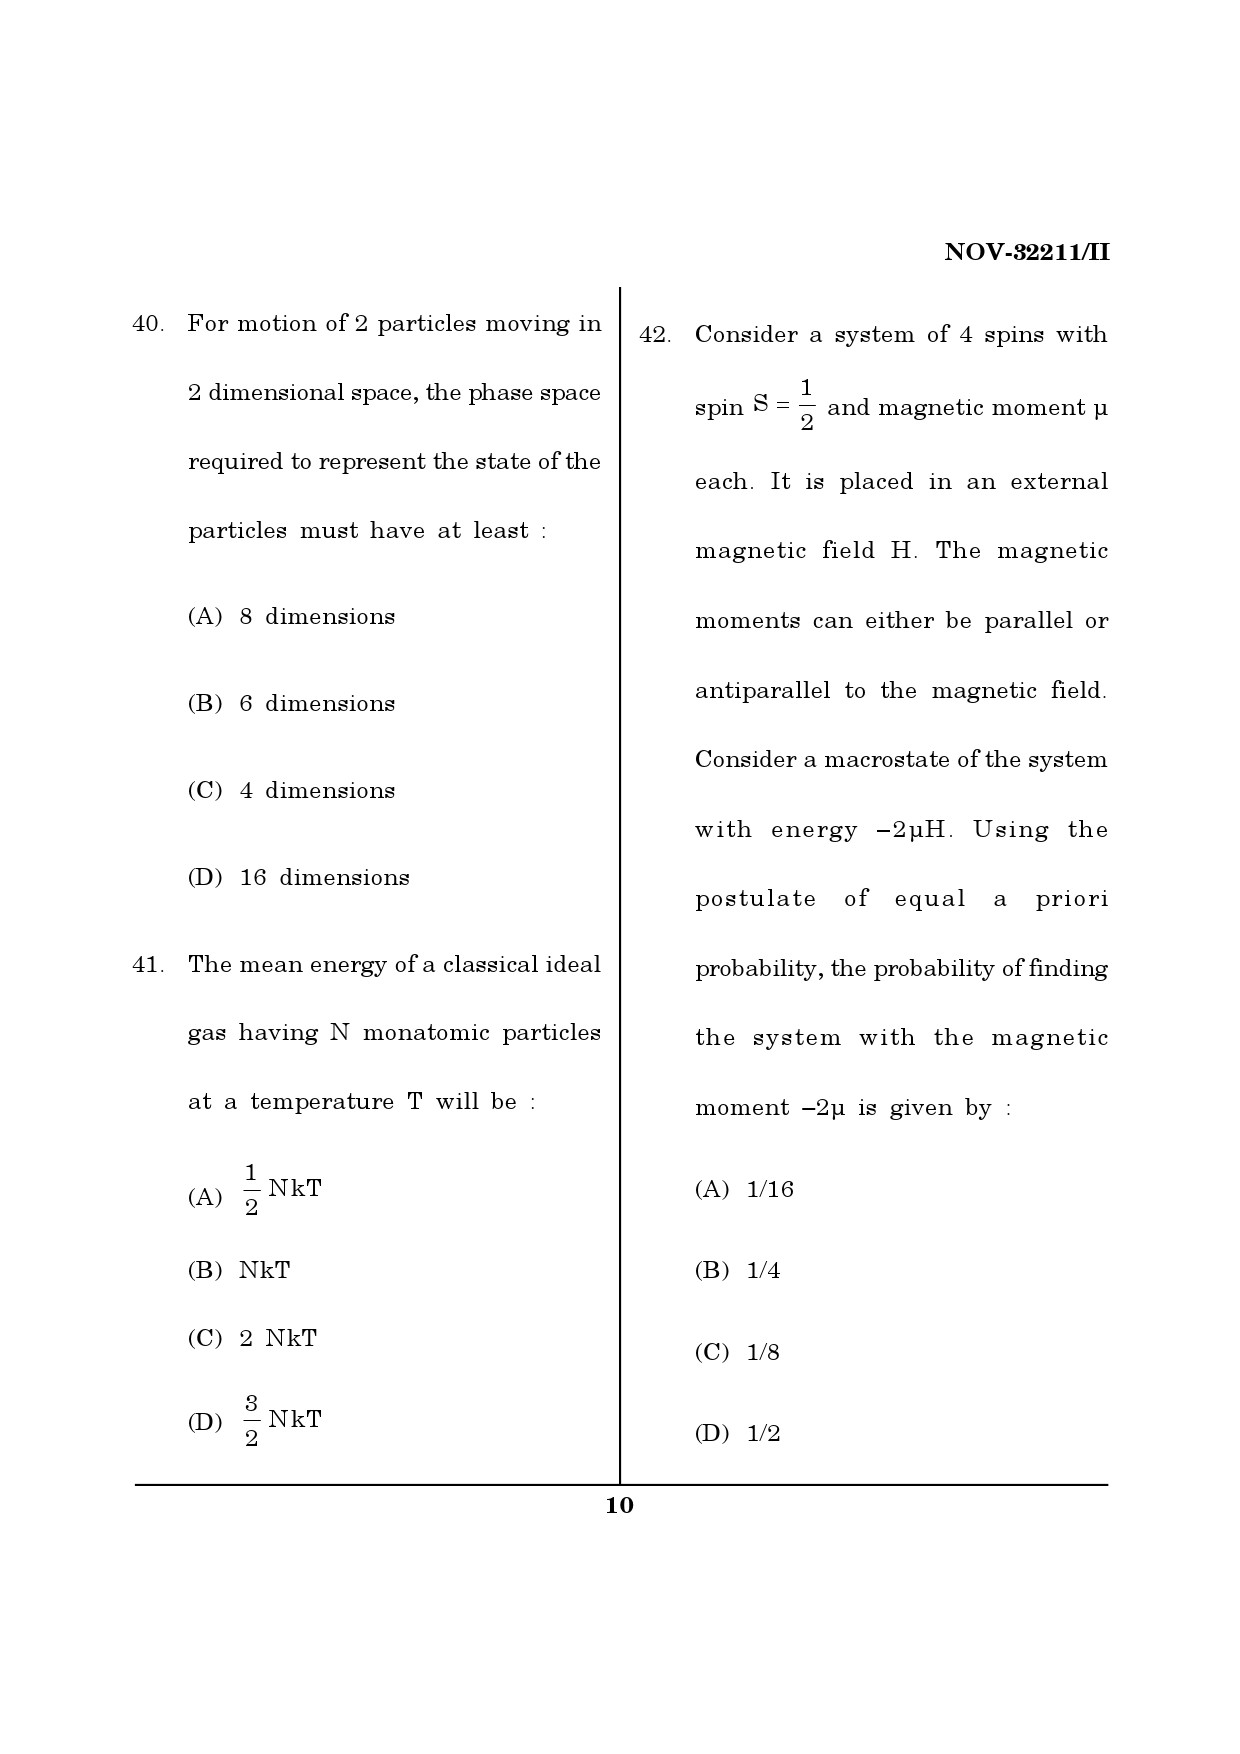 Maharashtra SET Physics Question Paper II November 2011 10